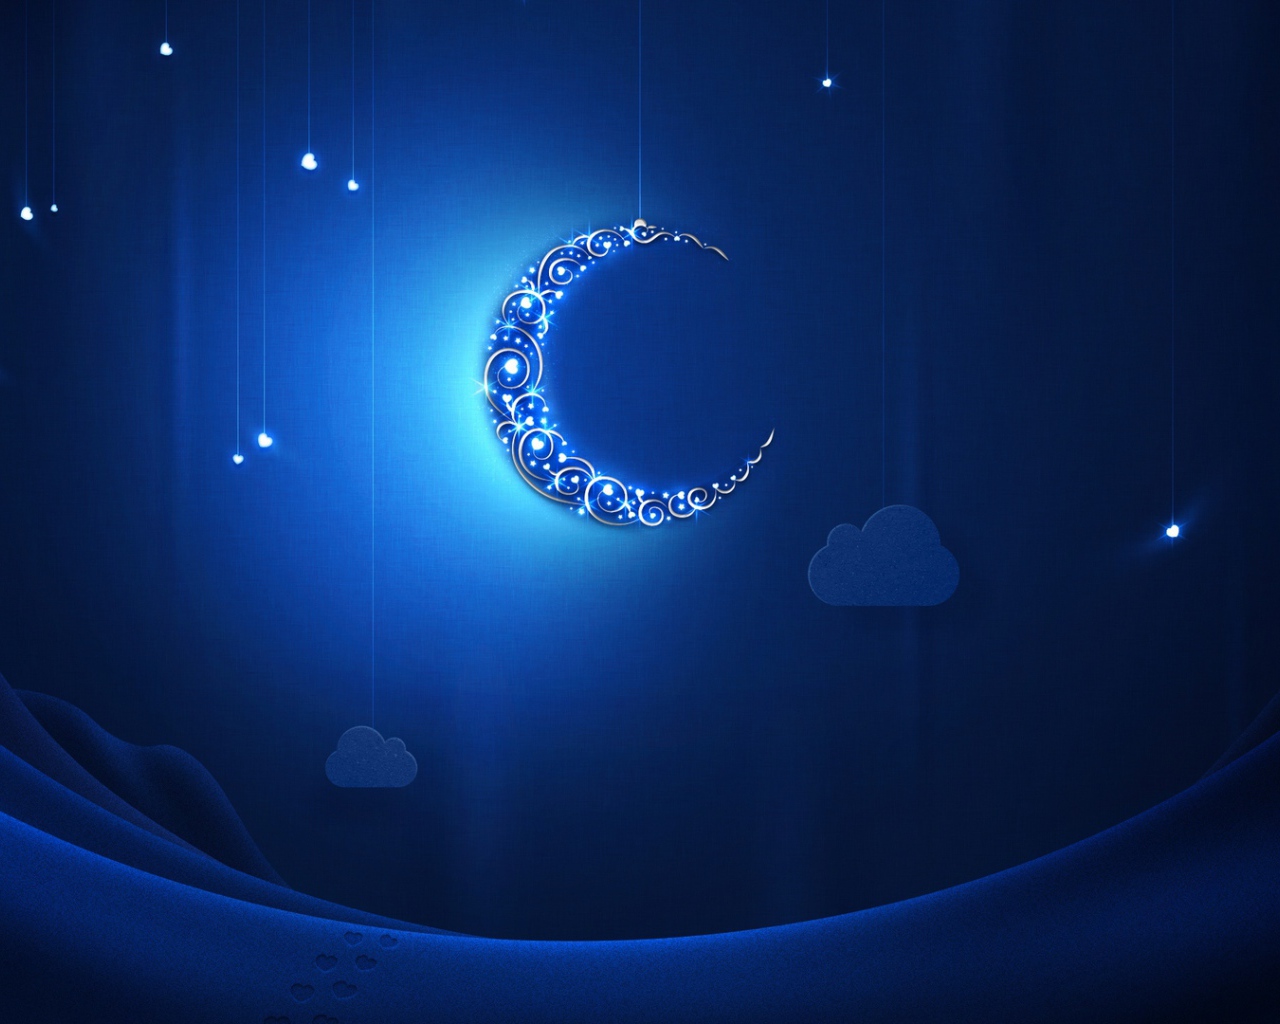 Blue moon at Ramadan